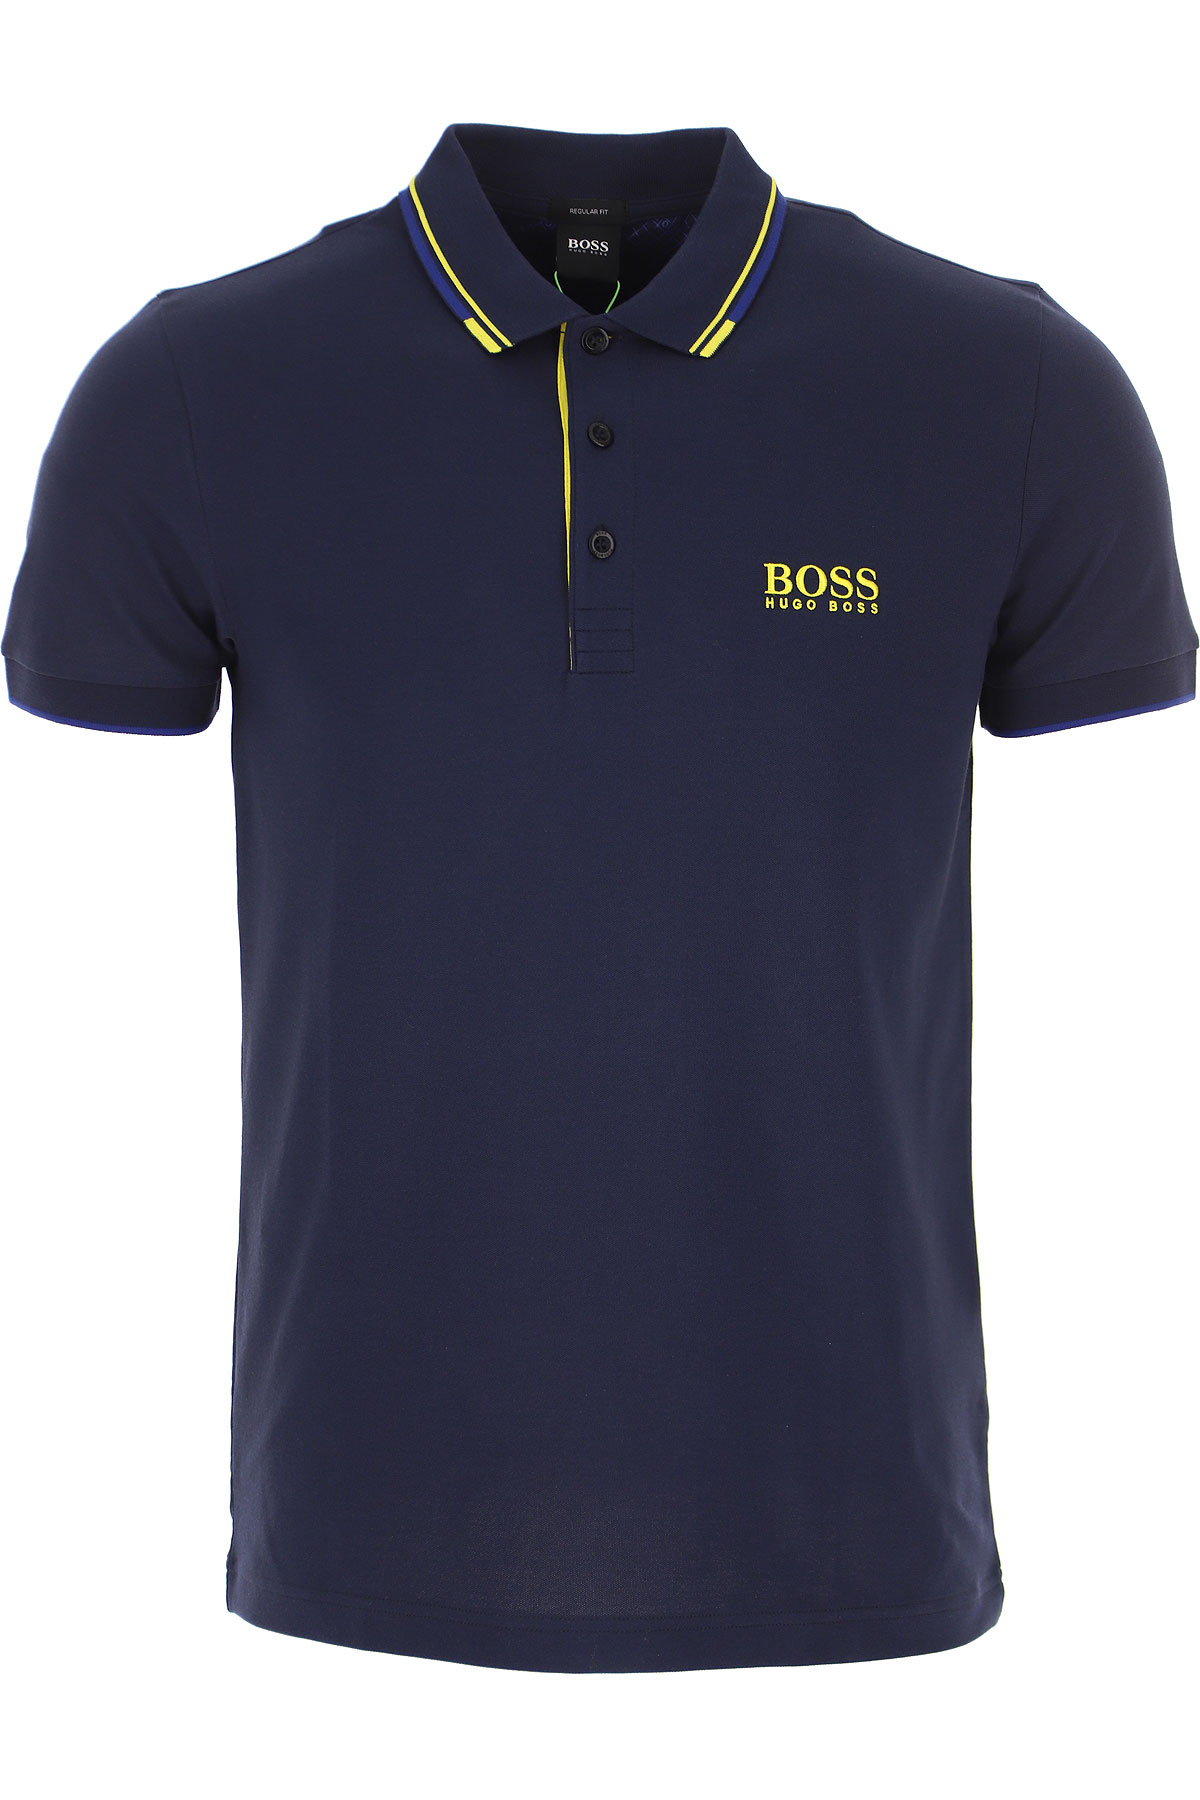 Mens Clothing Hugo Boss, Style code: 50430769-414-